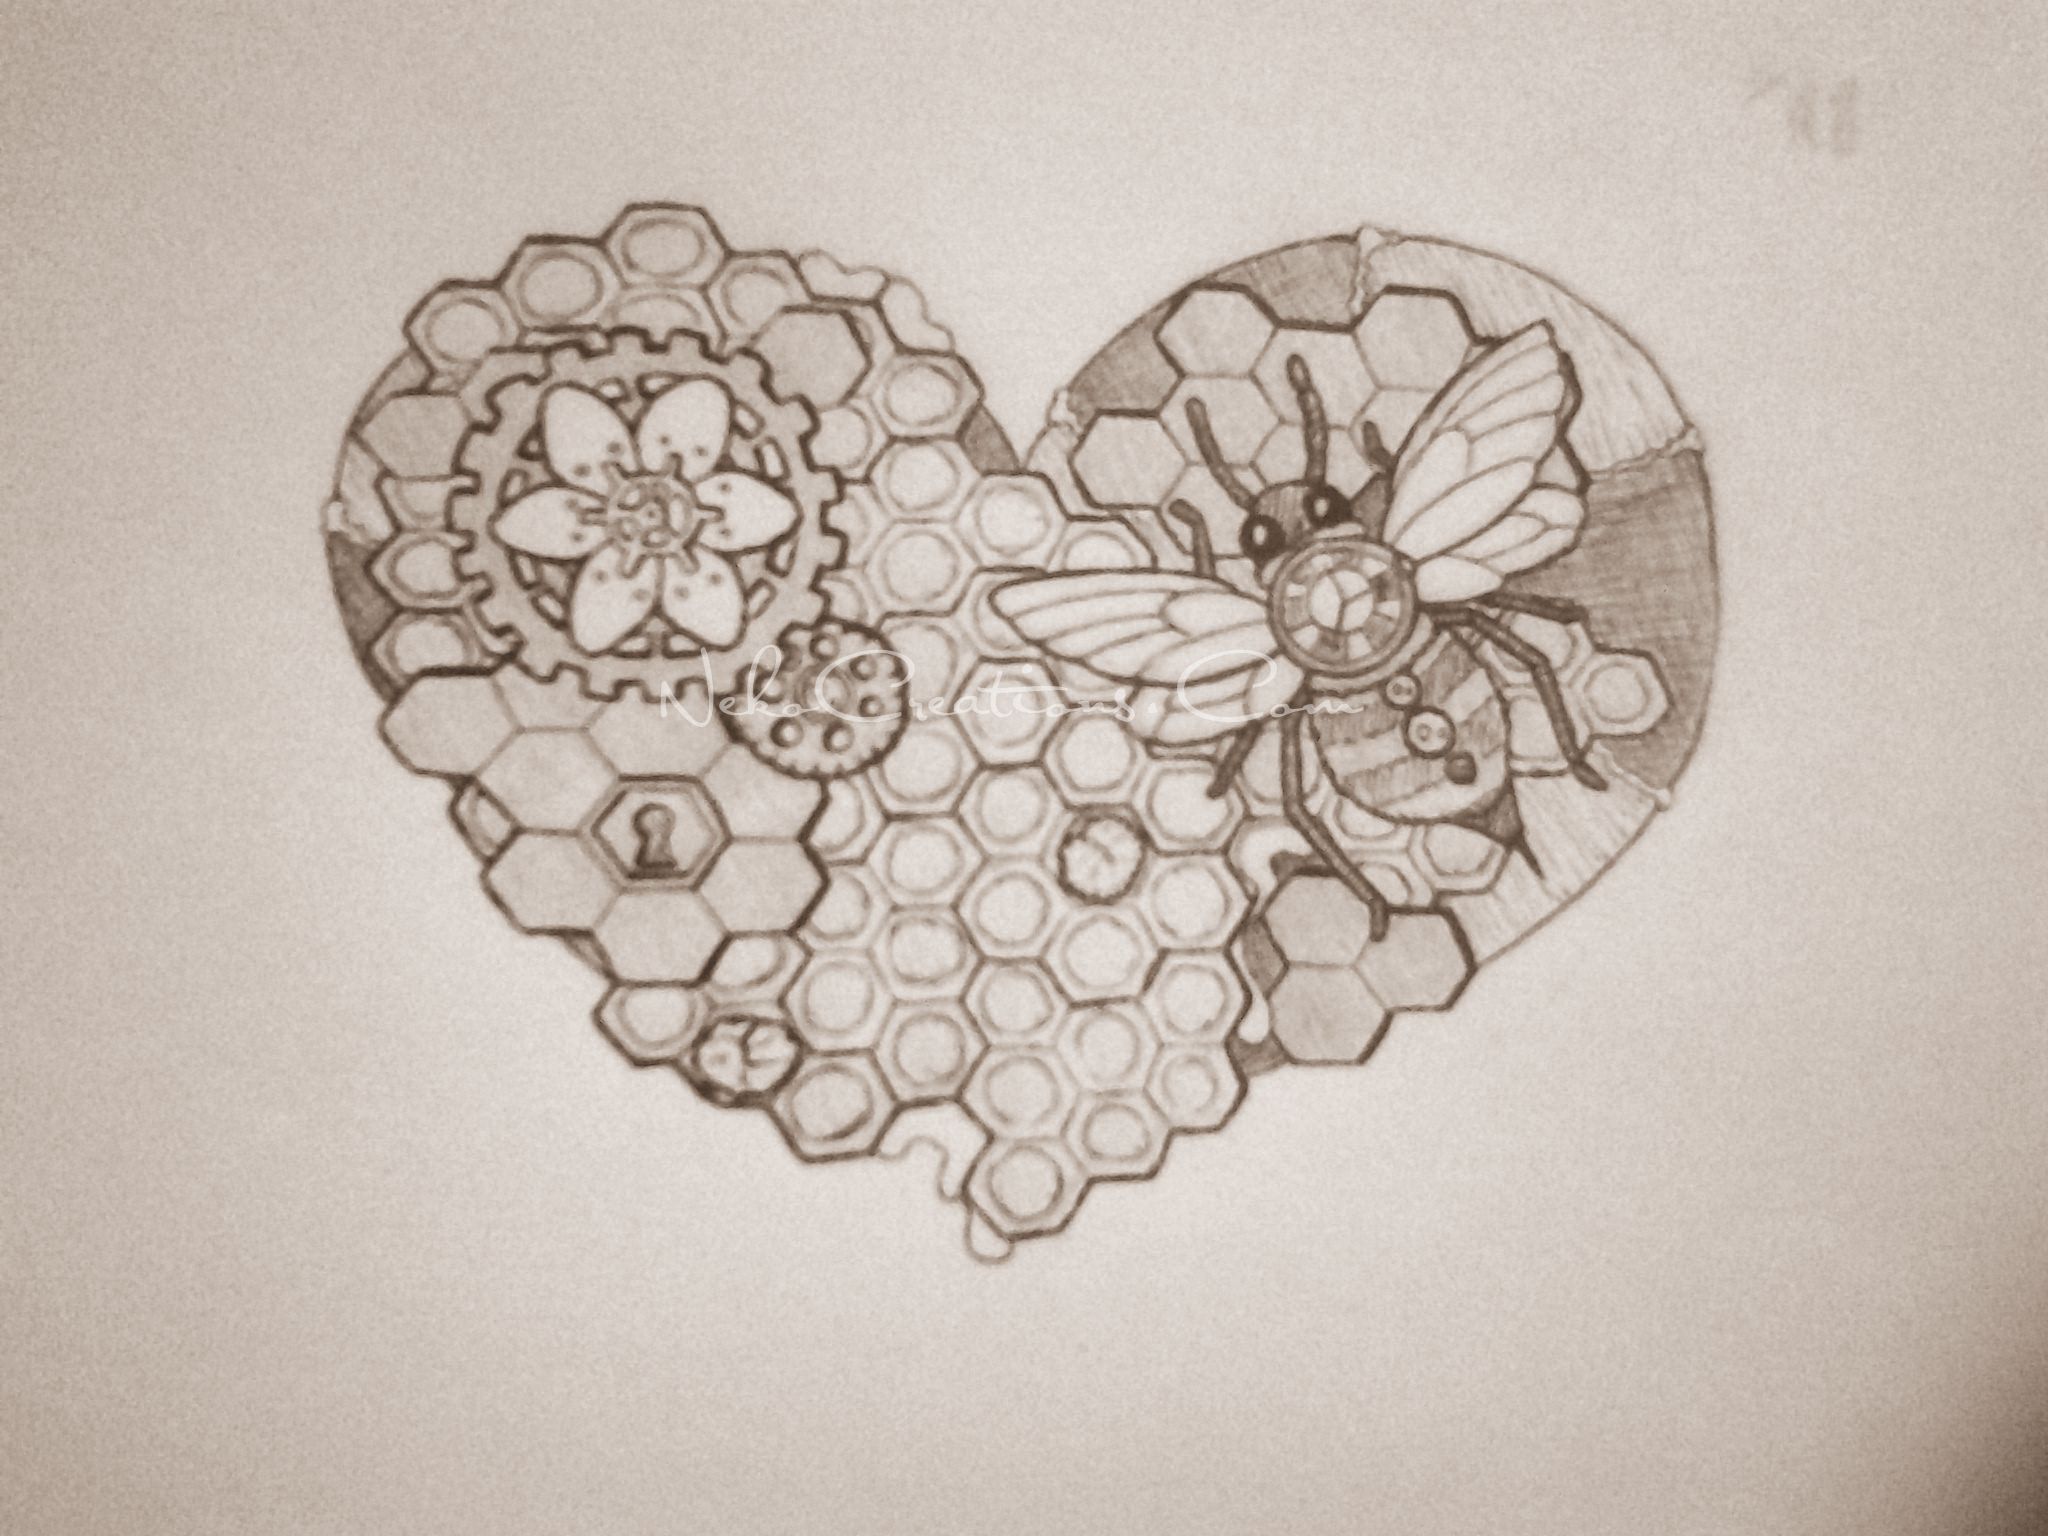 Honeycomb Drawing